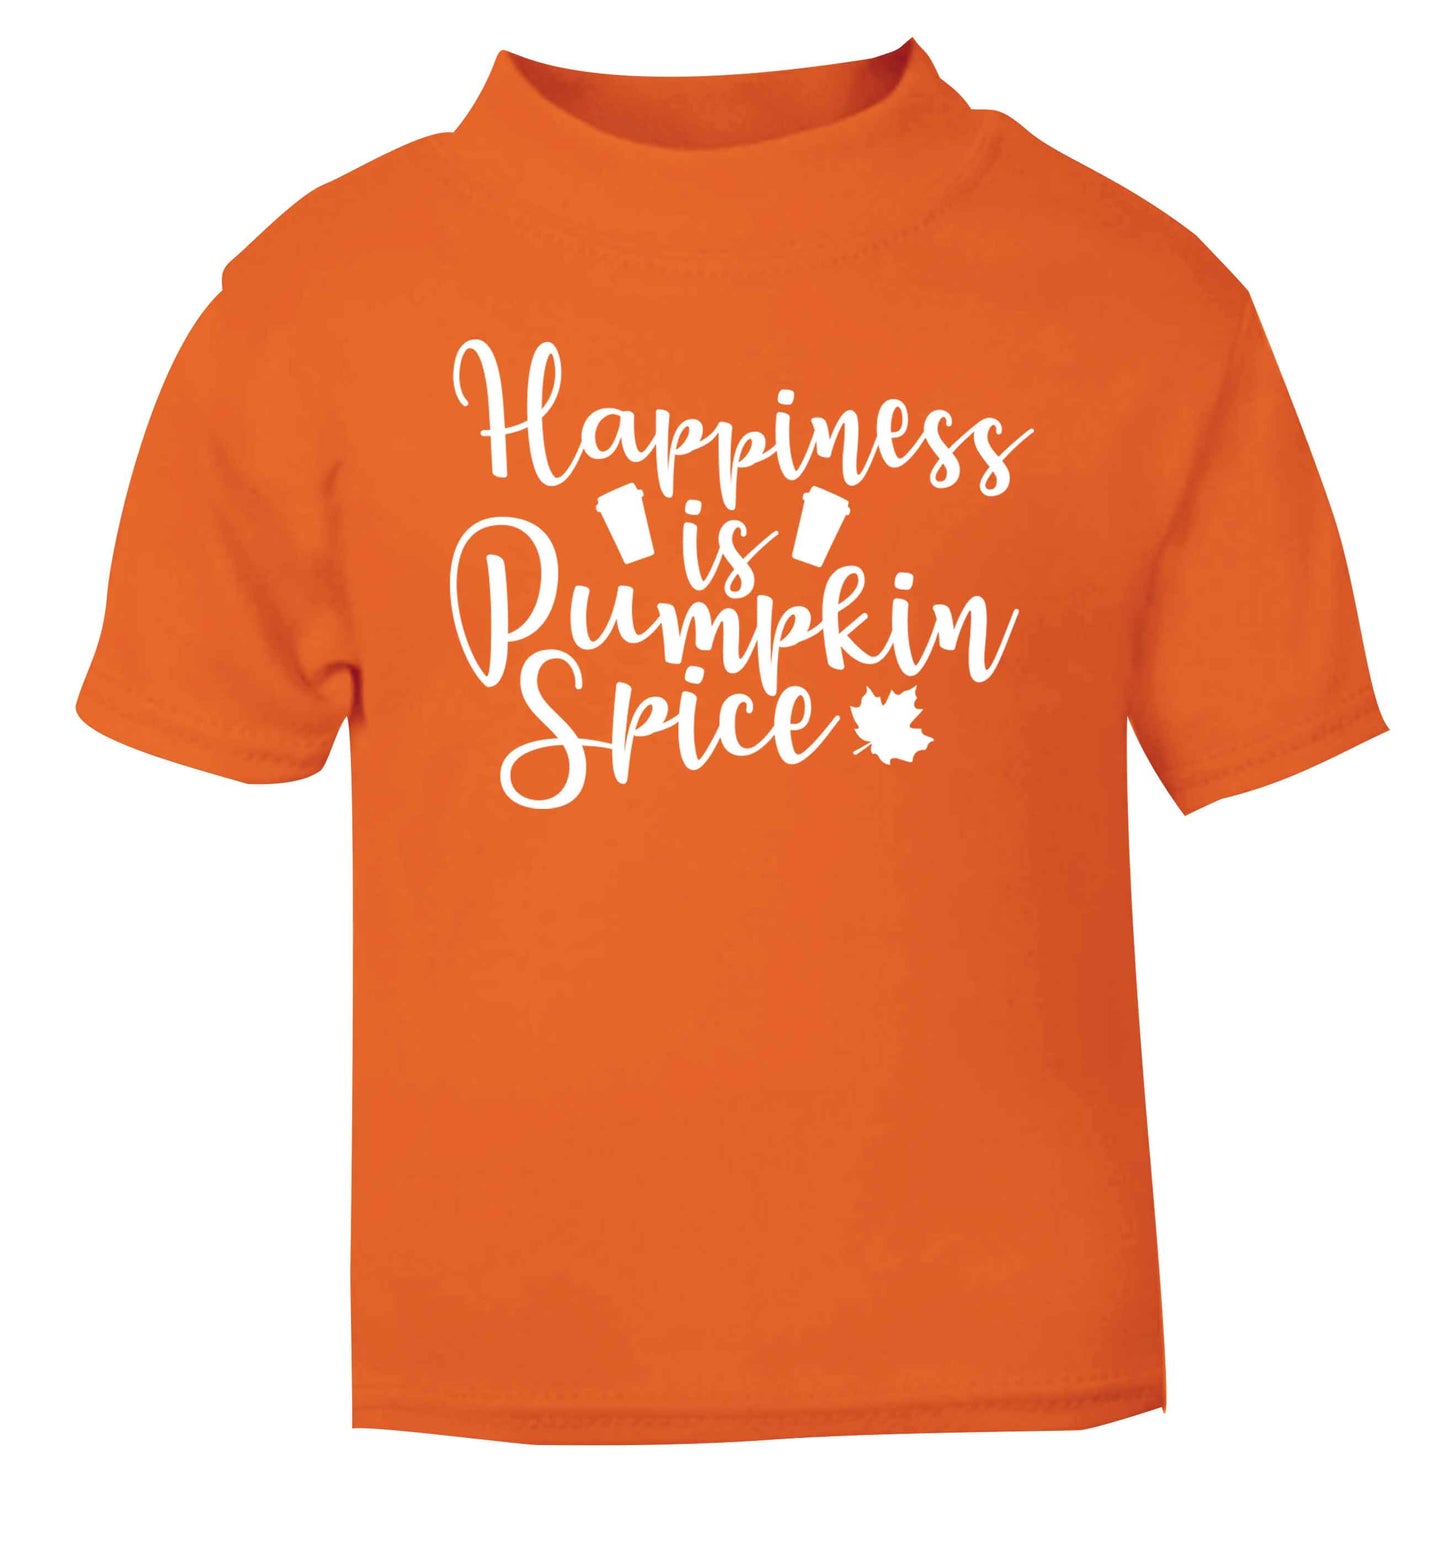 Happiness Pumpkin Spice orange baby toddler Tshirt 2 Years